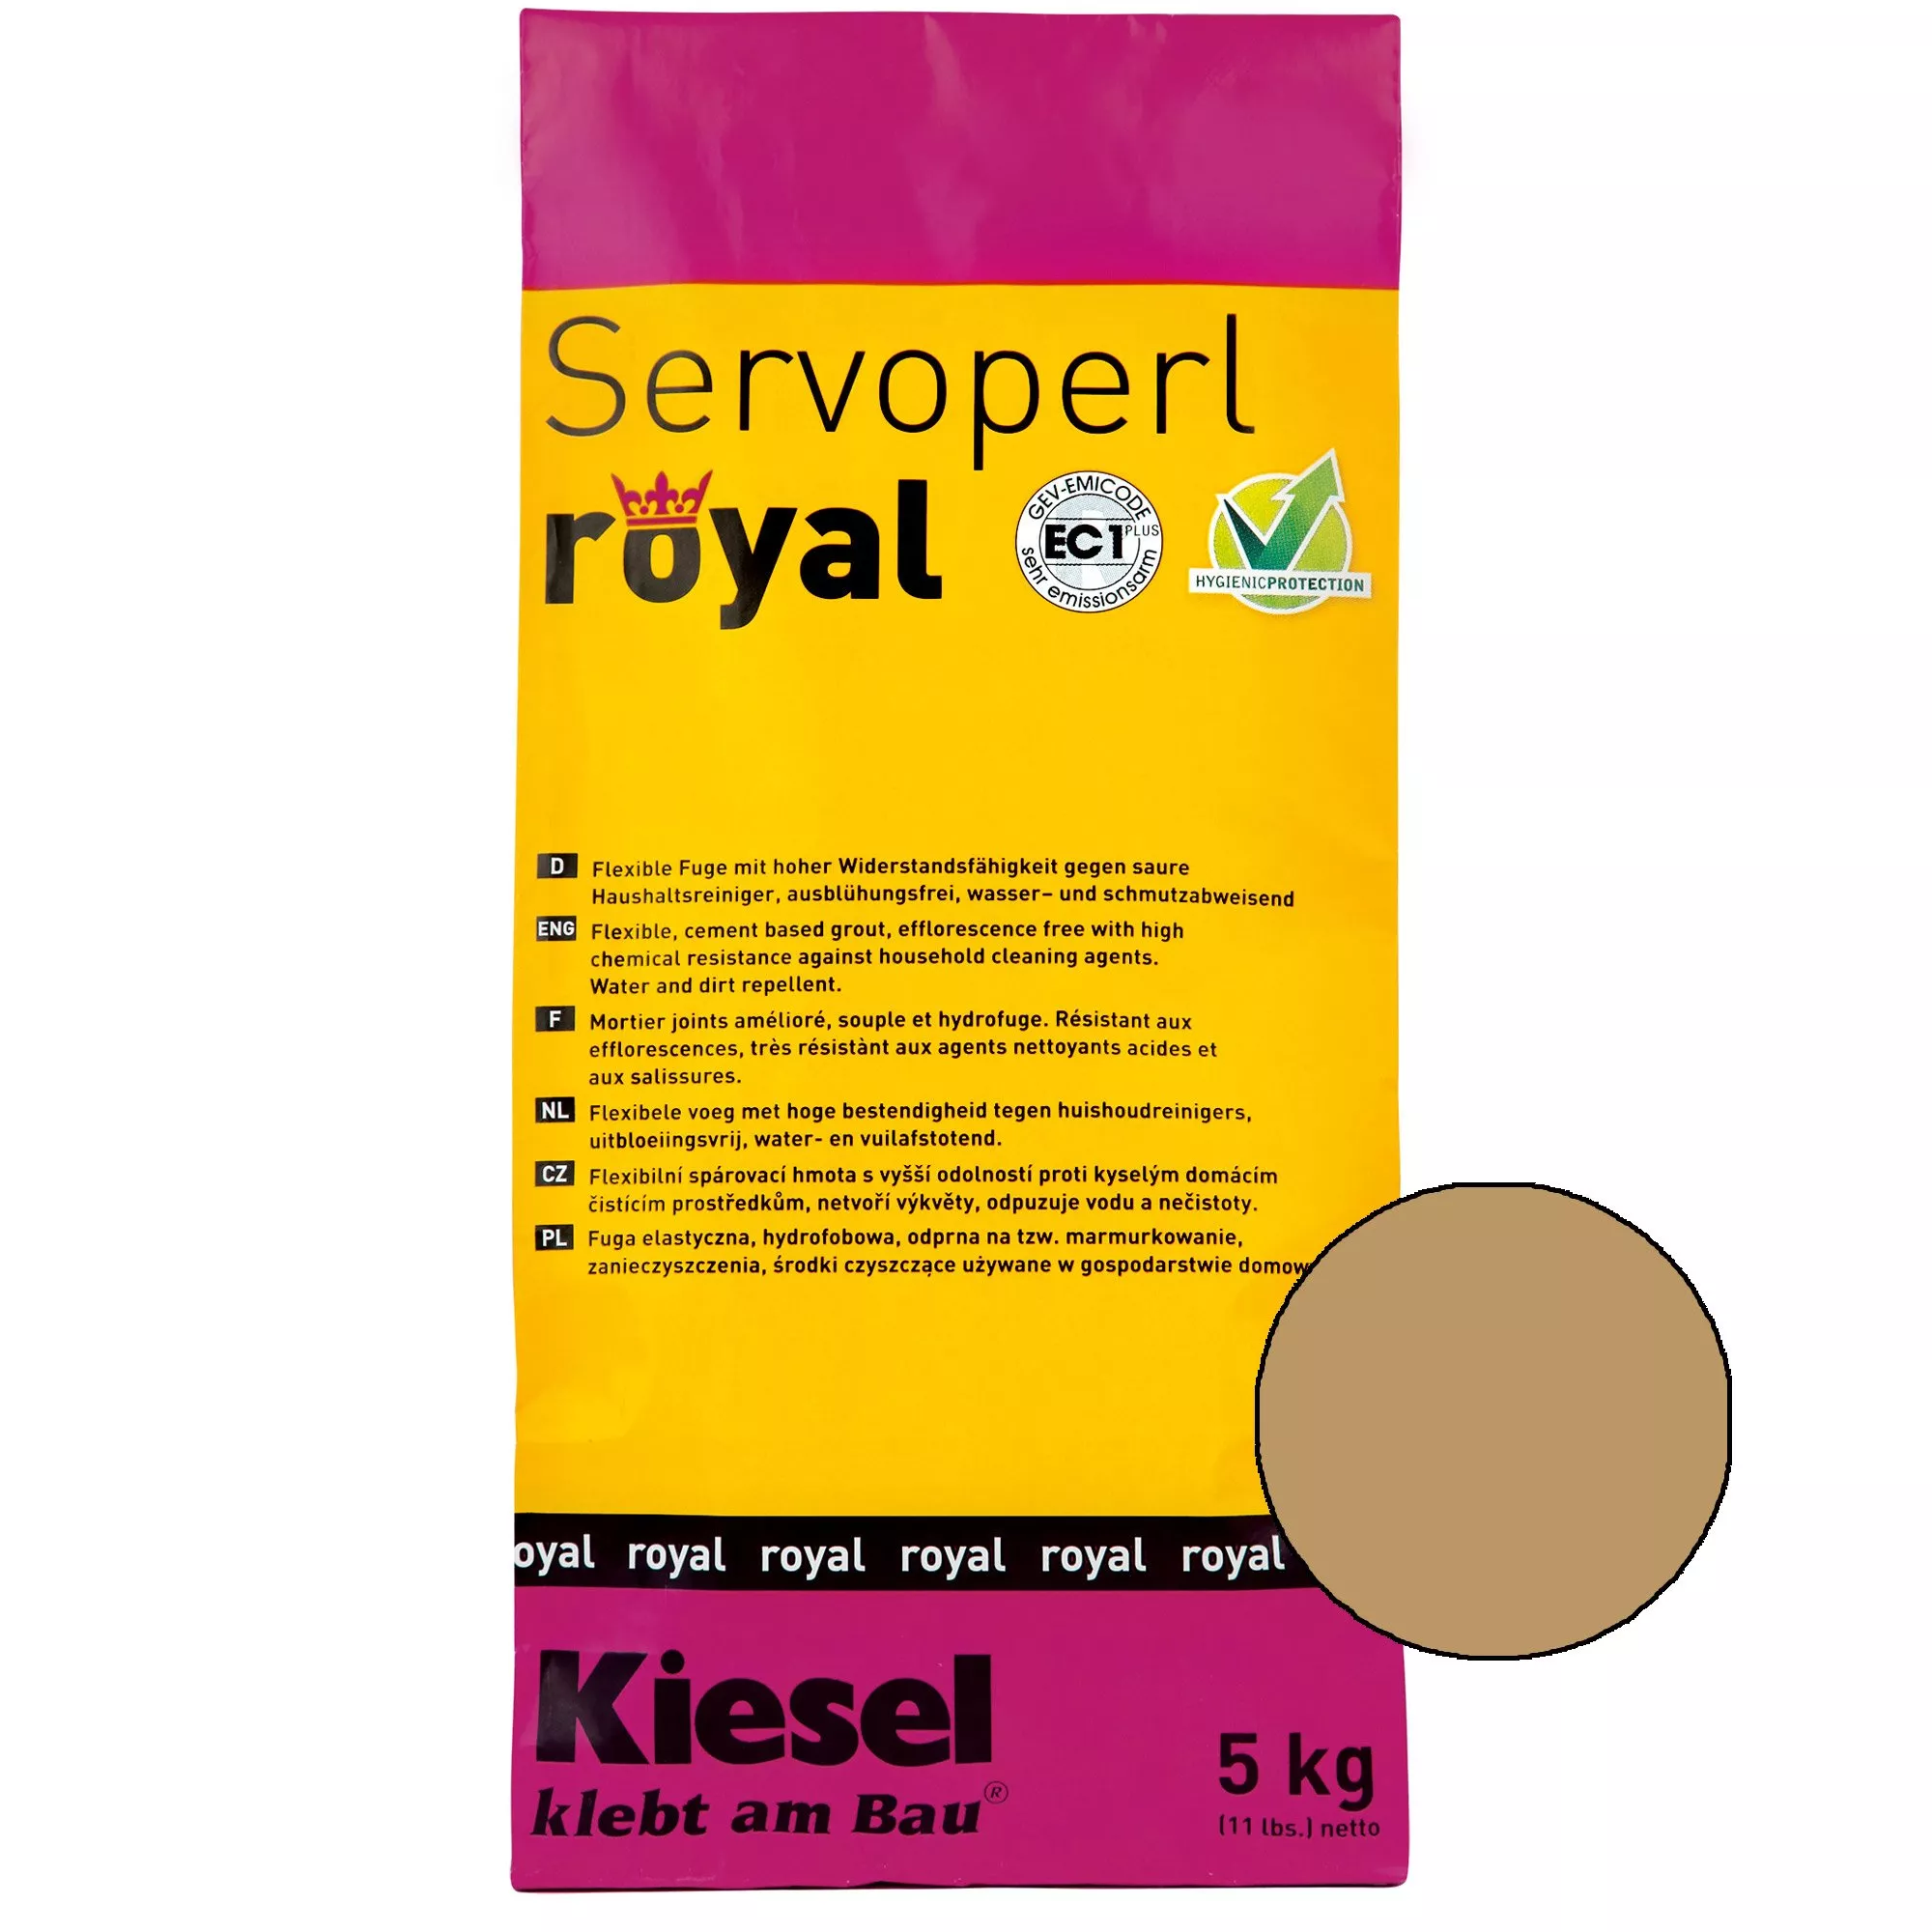 Kiesel Servoperl royal - flexible, water- and dirt-repellent joint (5KG light brown)